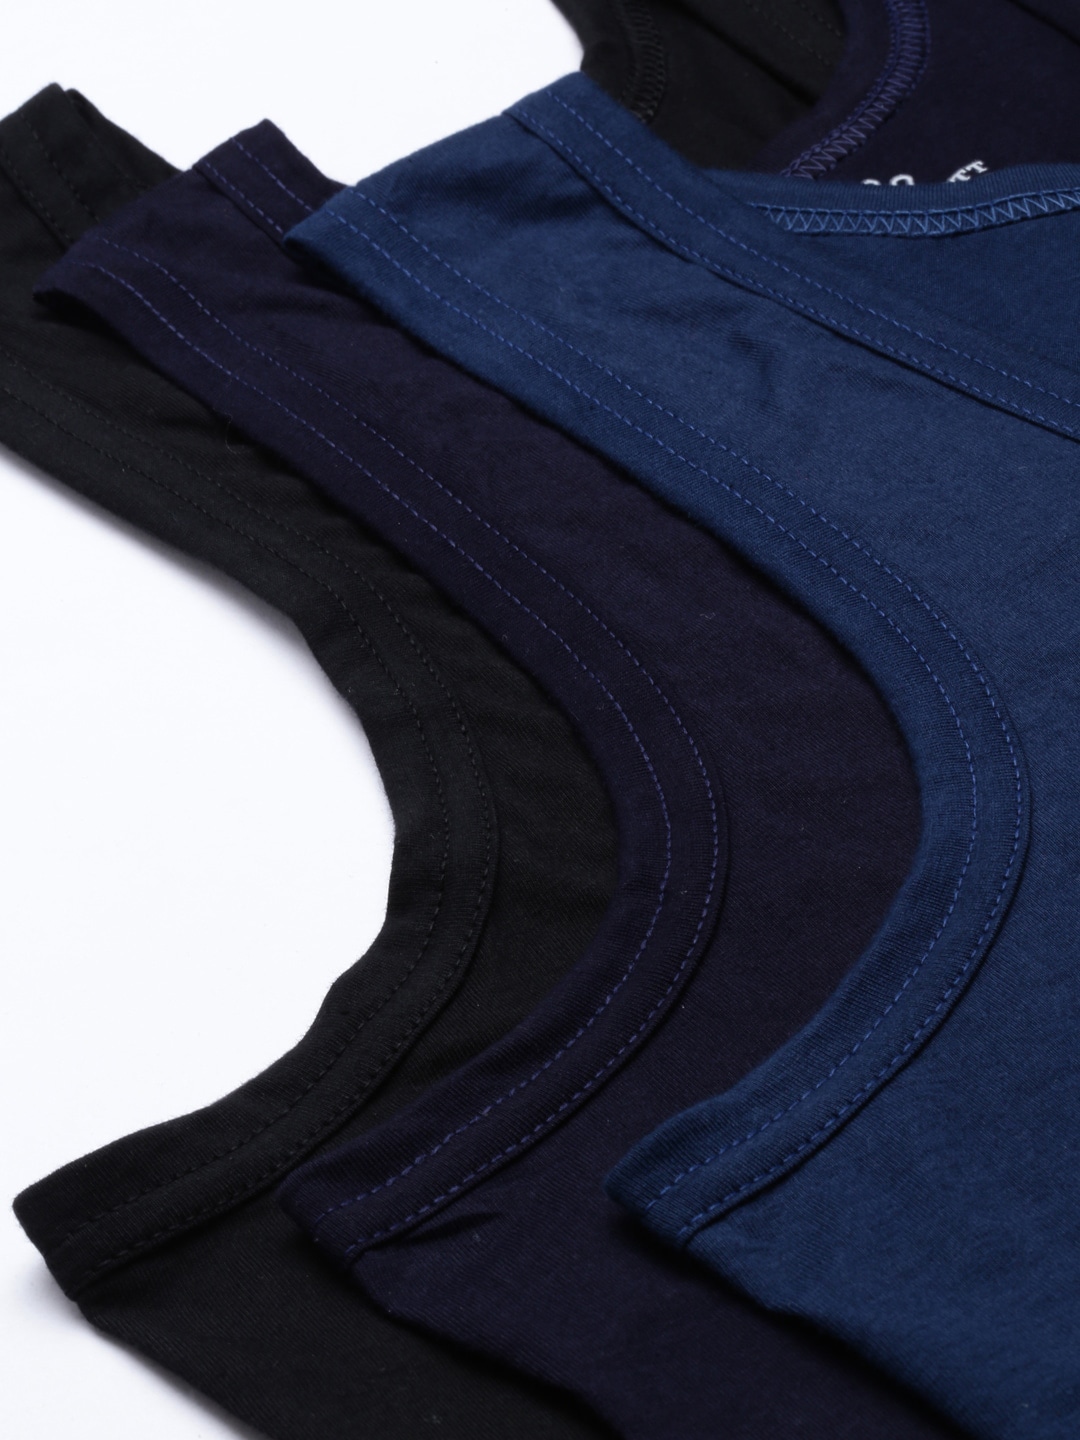 Clothing Innerwear Vests | DIXCY SCOTT Men Navy Blue & Black Cotton Innerwear Vests Pack Of 3 - GZ29760